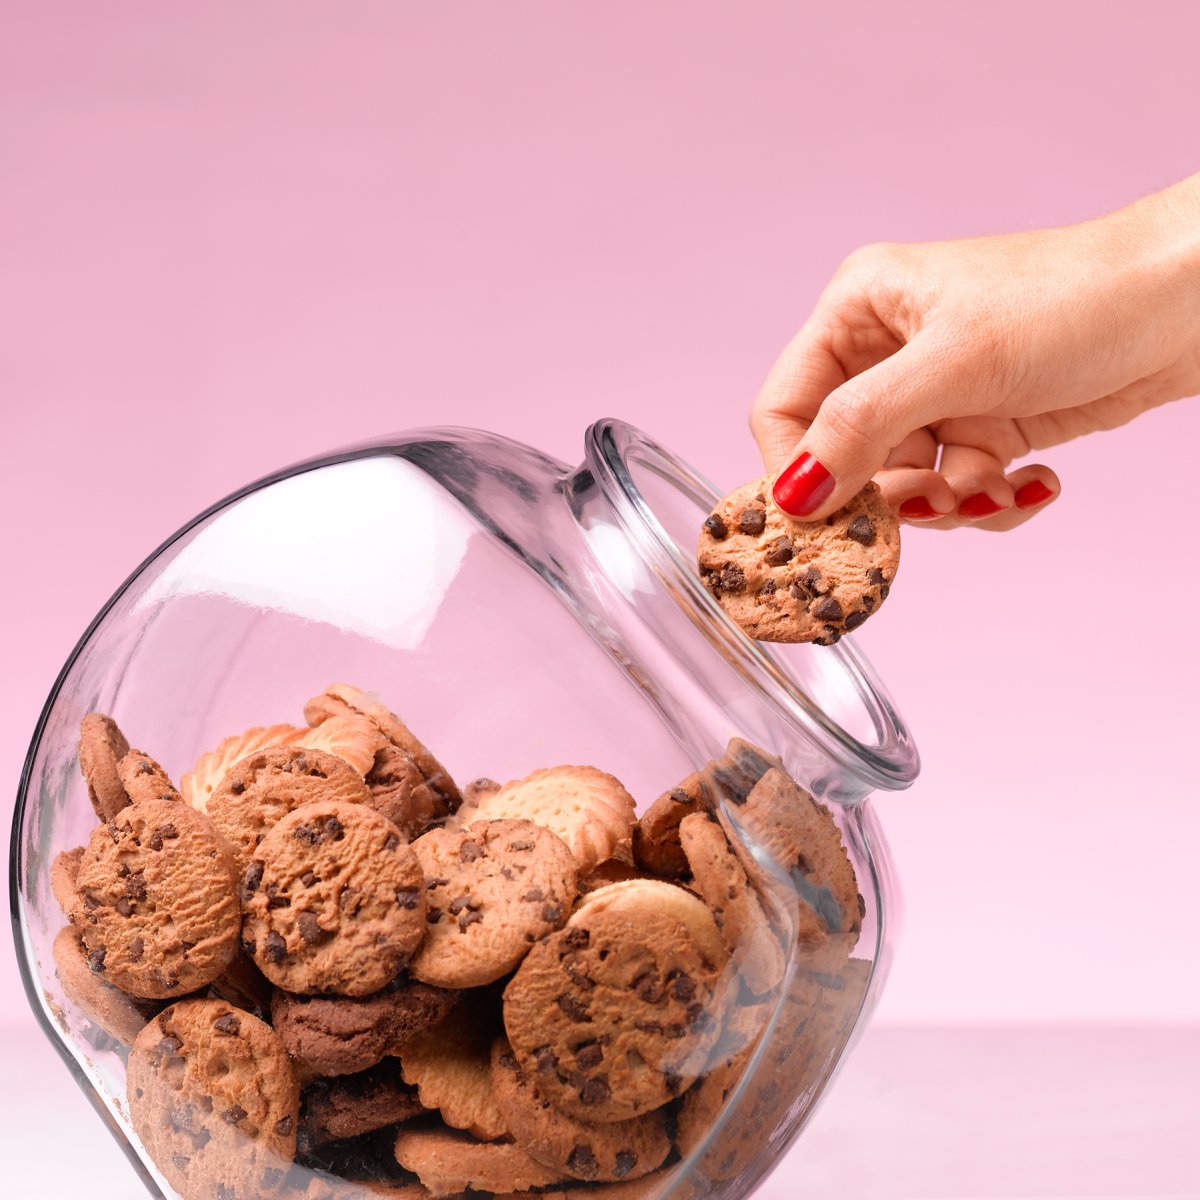 Temptation - hand in a cookie jar